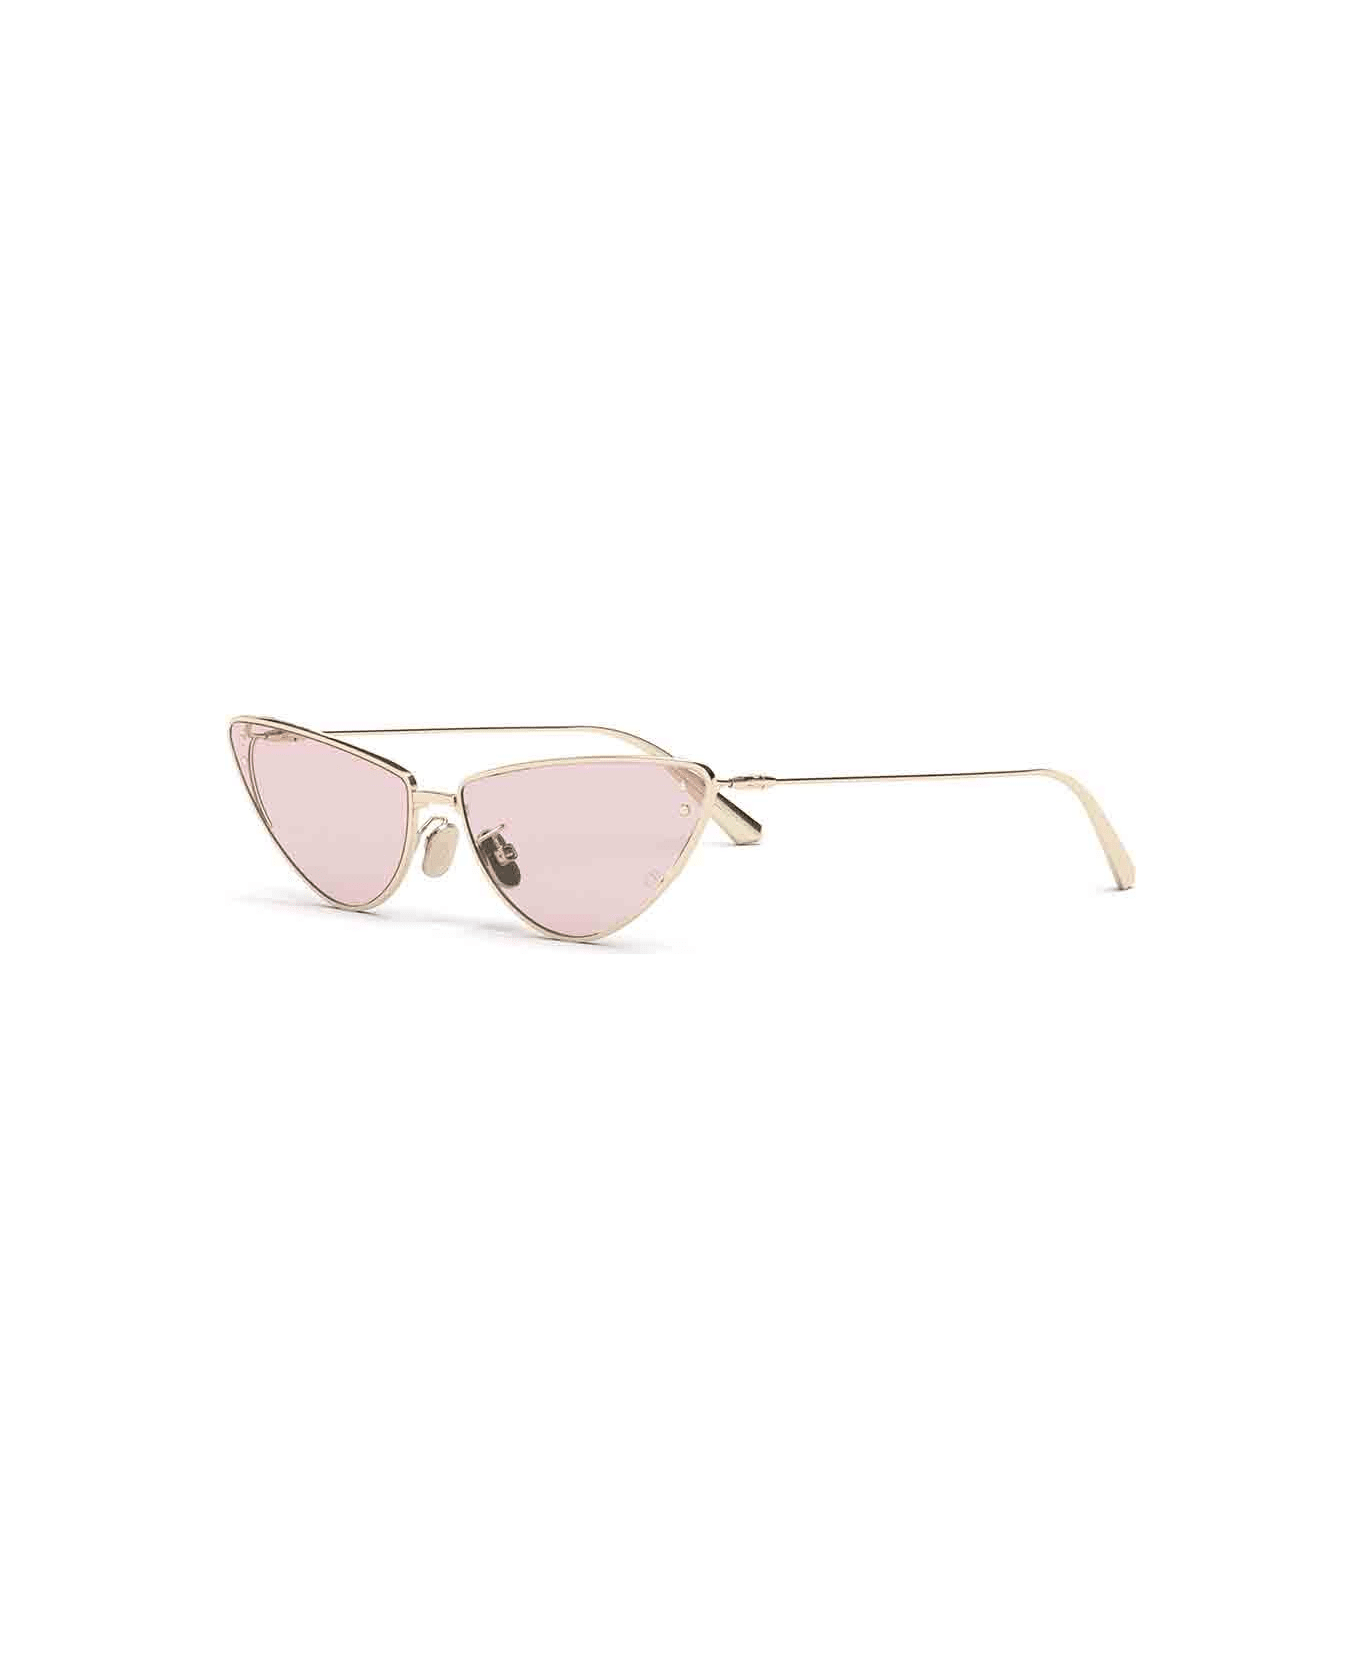 Dior Eyewear Sunglasses - Oro/Rosa サングラス